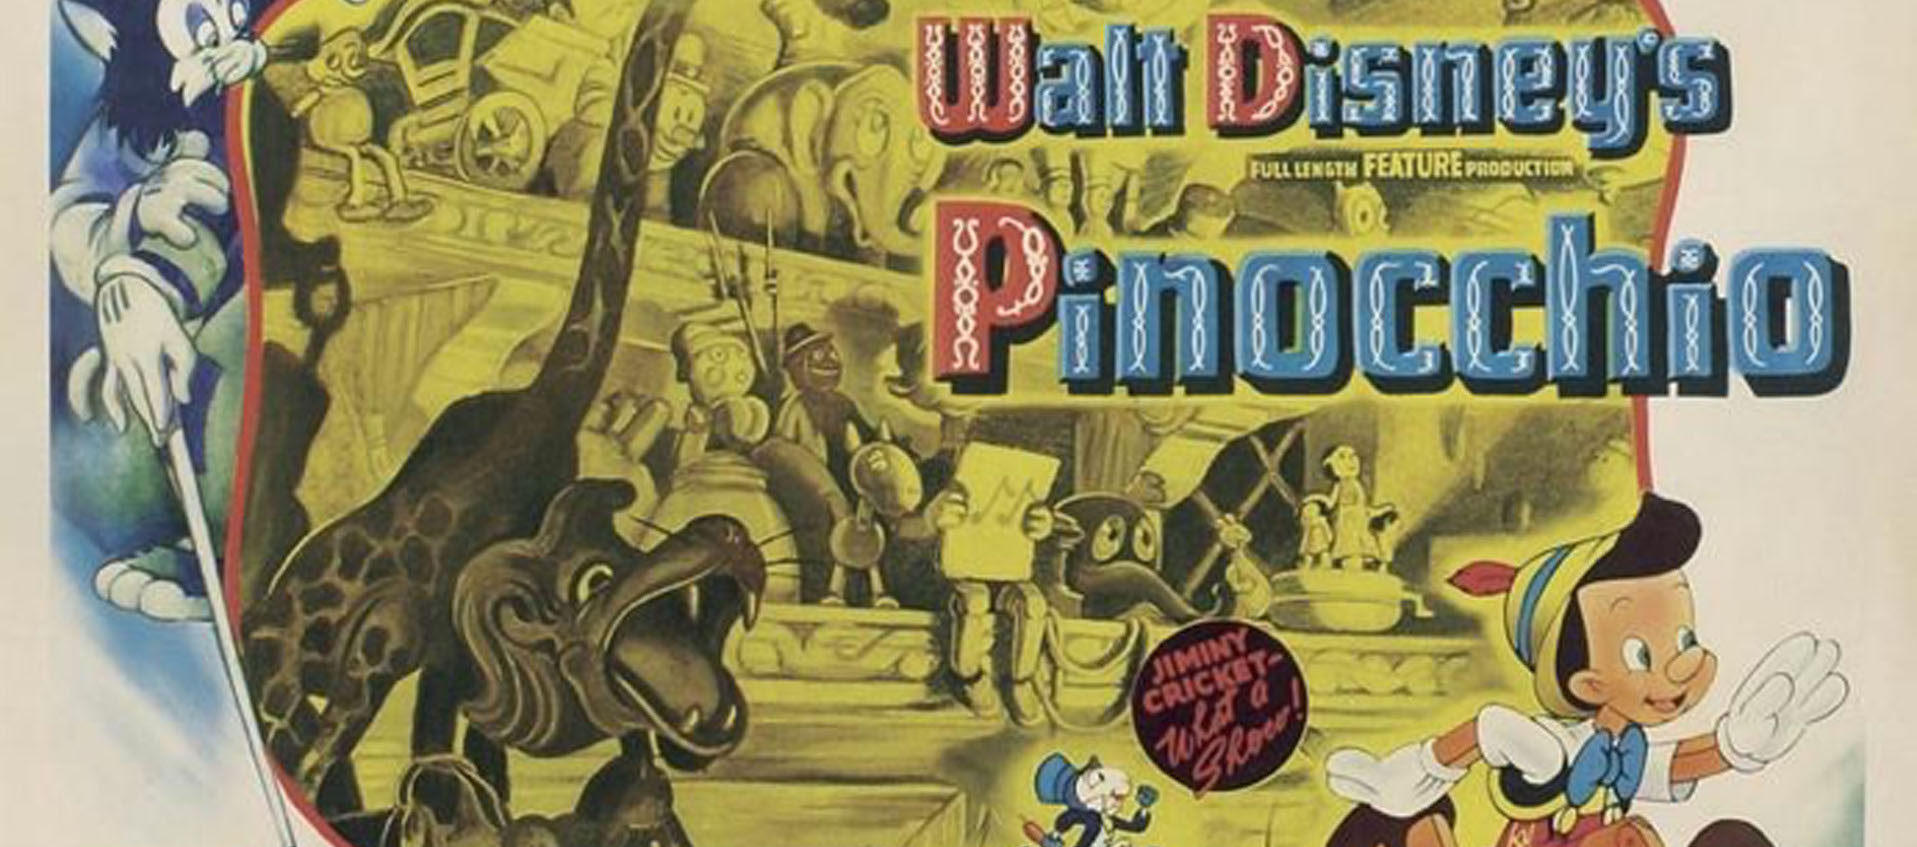 Promotional image for Pinocchio, courtesy of Disney Studios